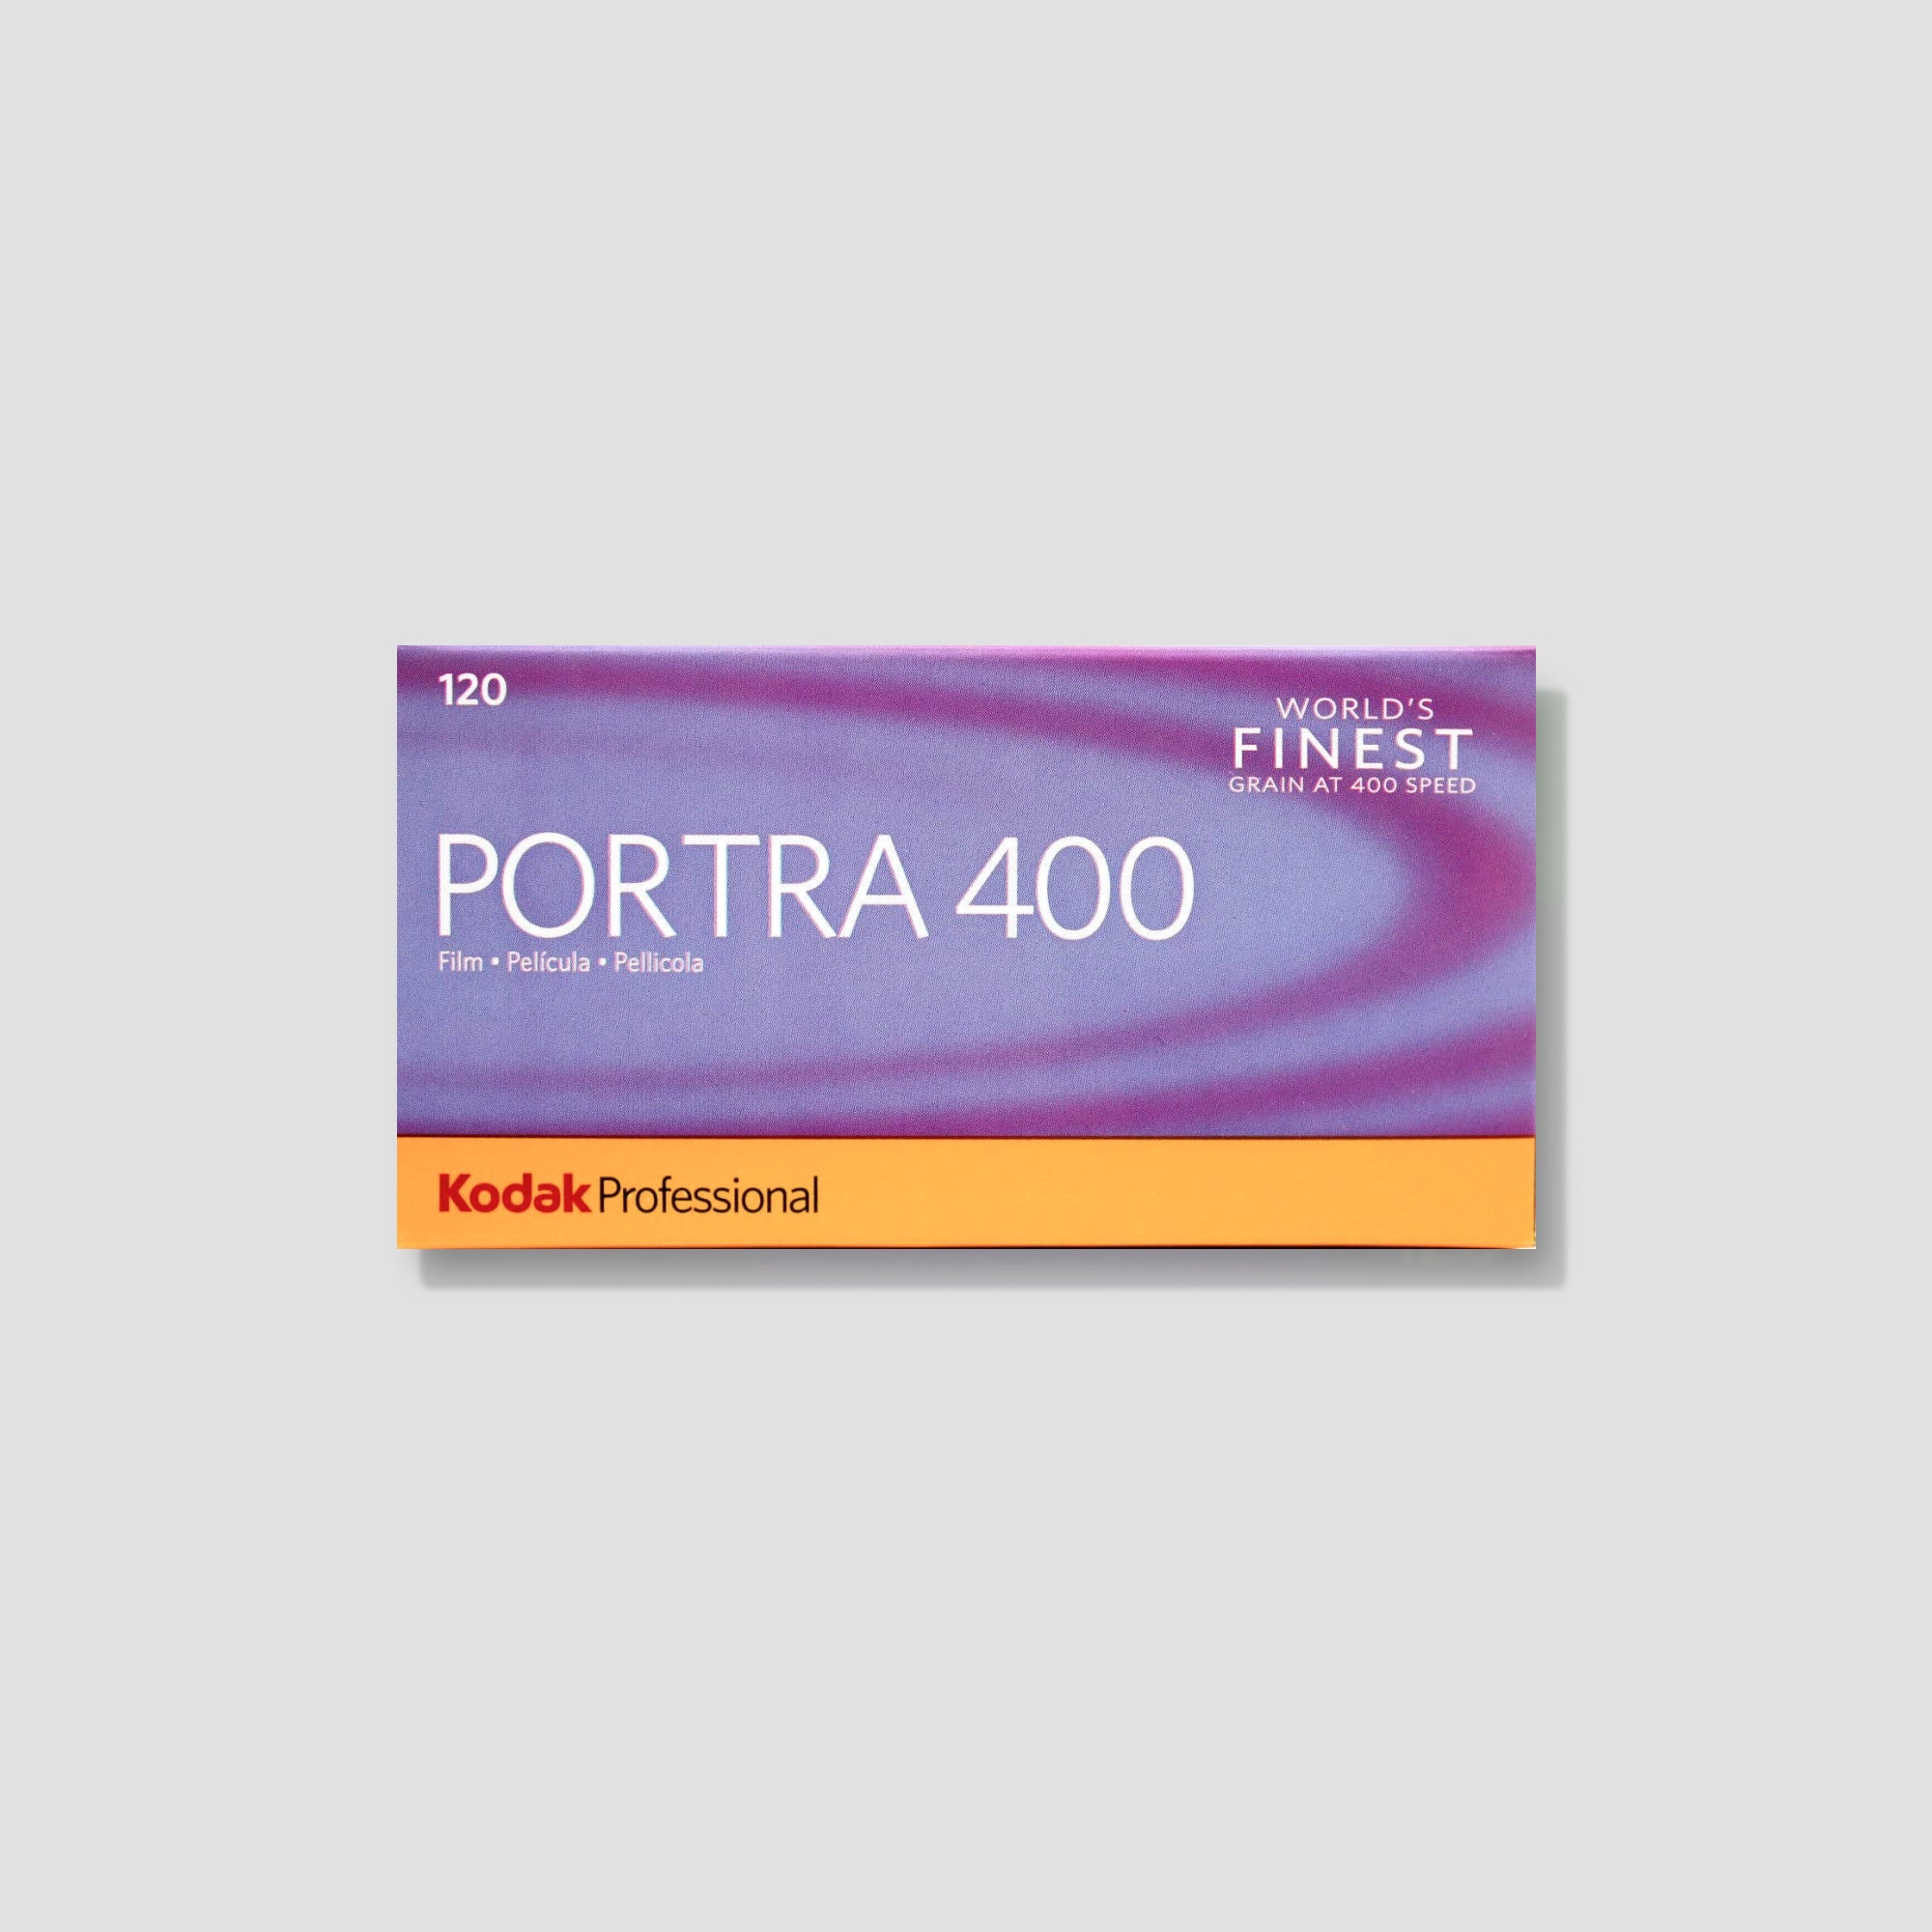 Buy Kodak Portra 400/12 120 now at Analogue Amsterdam